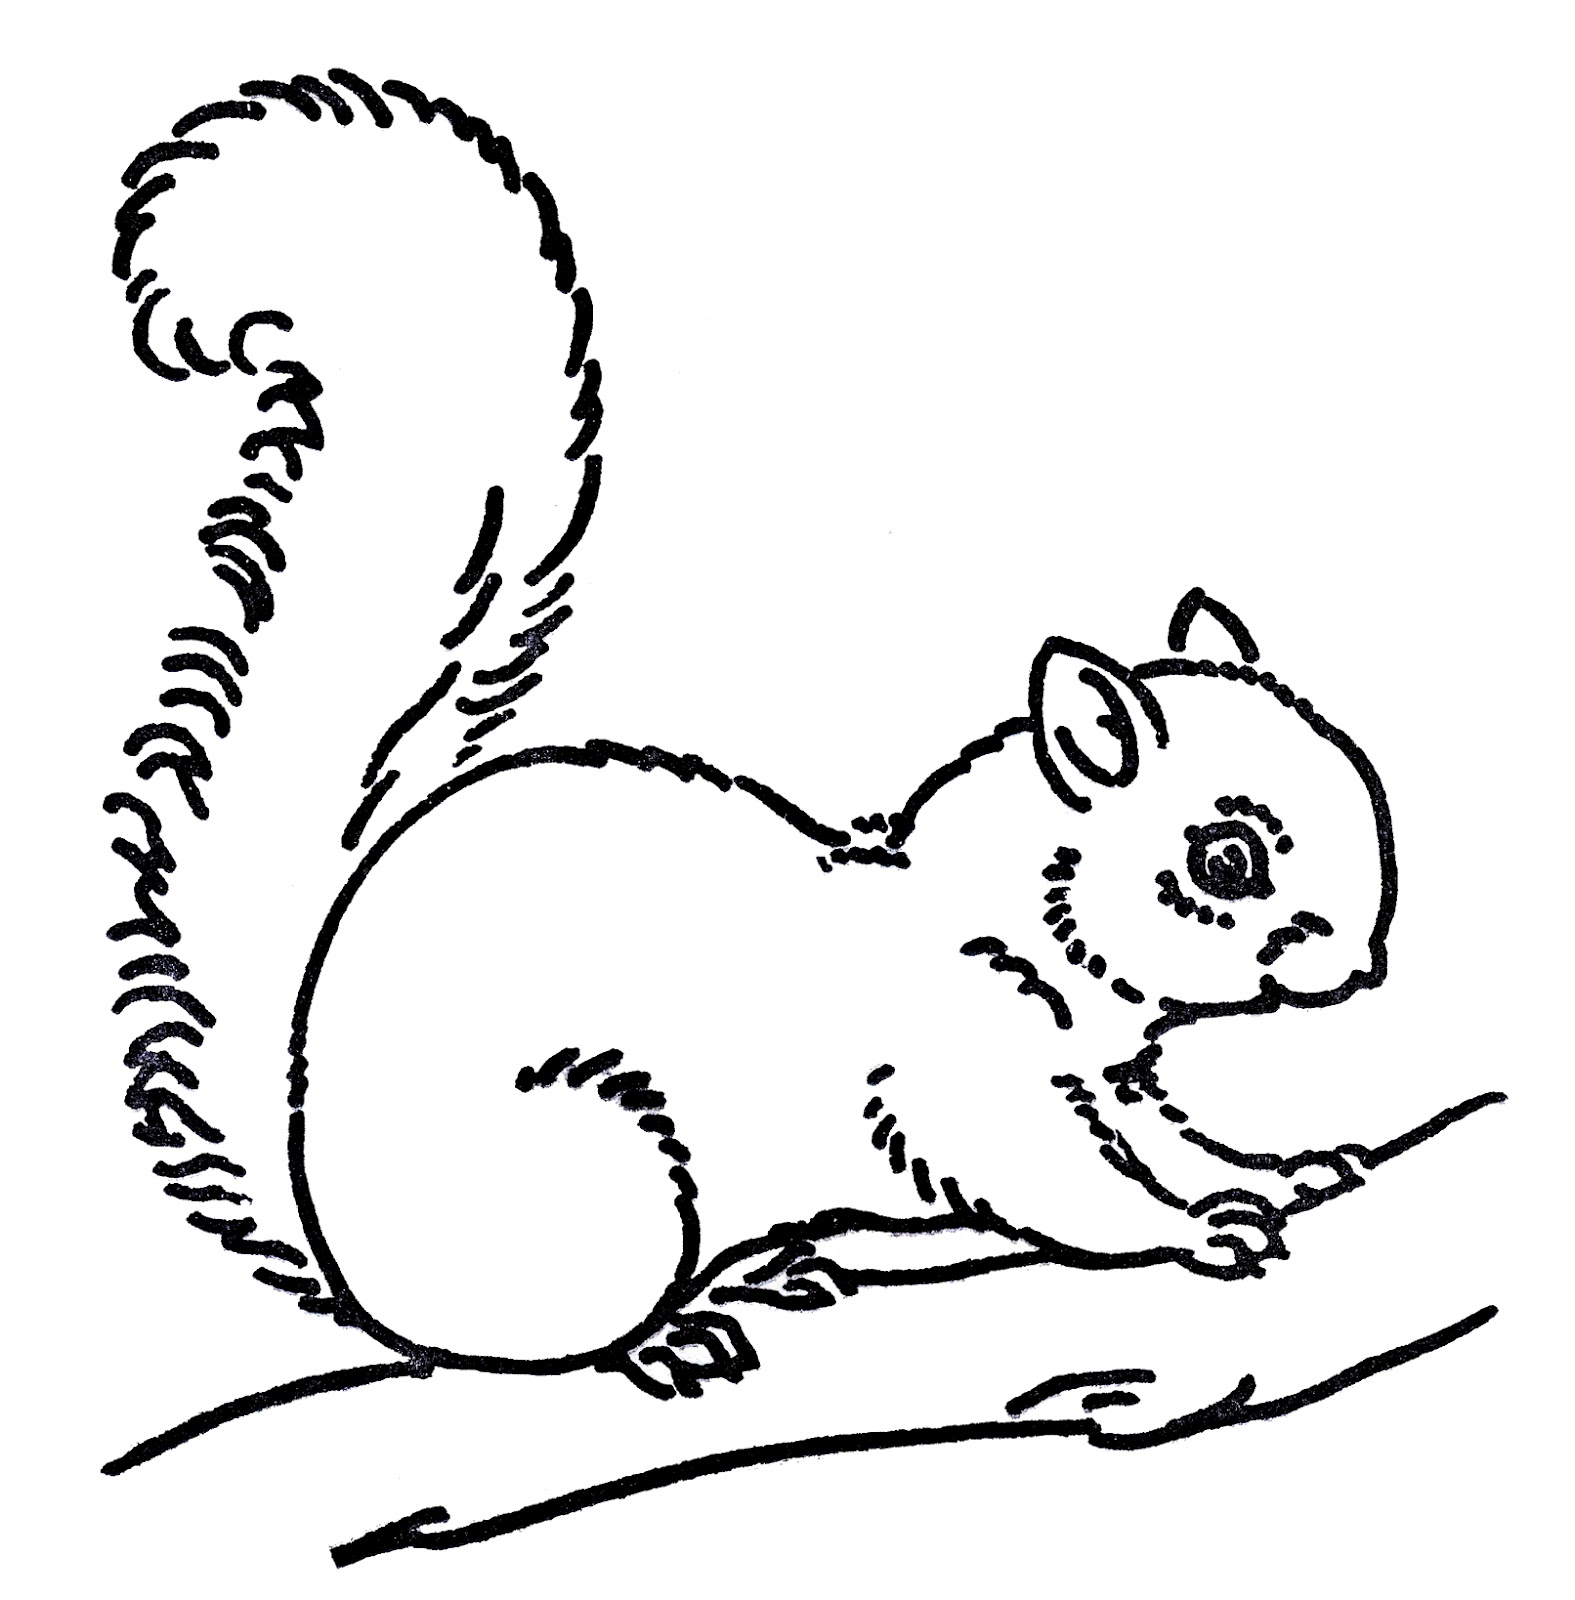 Squirrel-Line-Art-GraphicsFairy.jpg